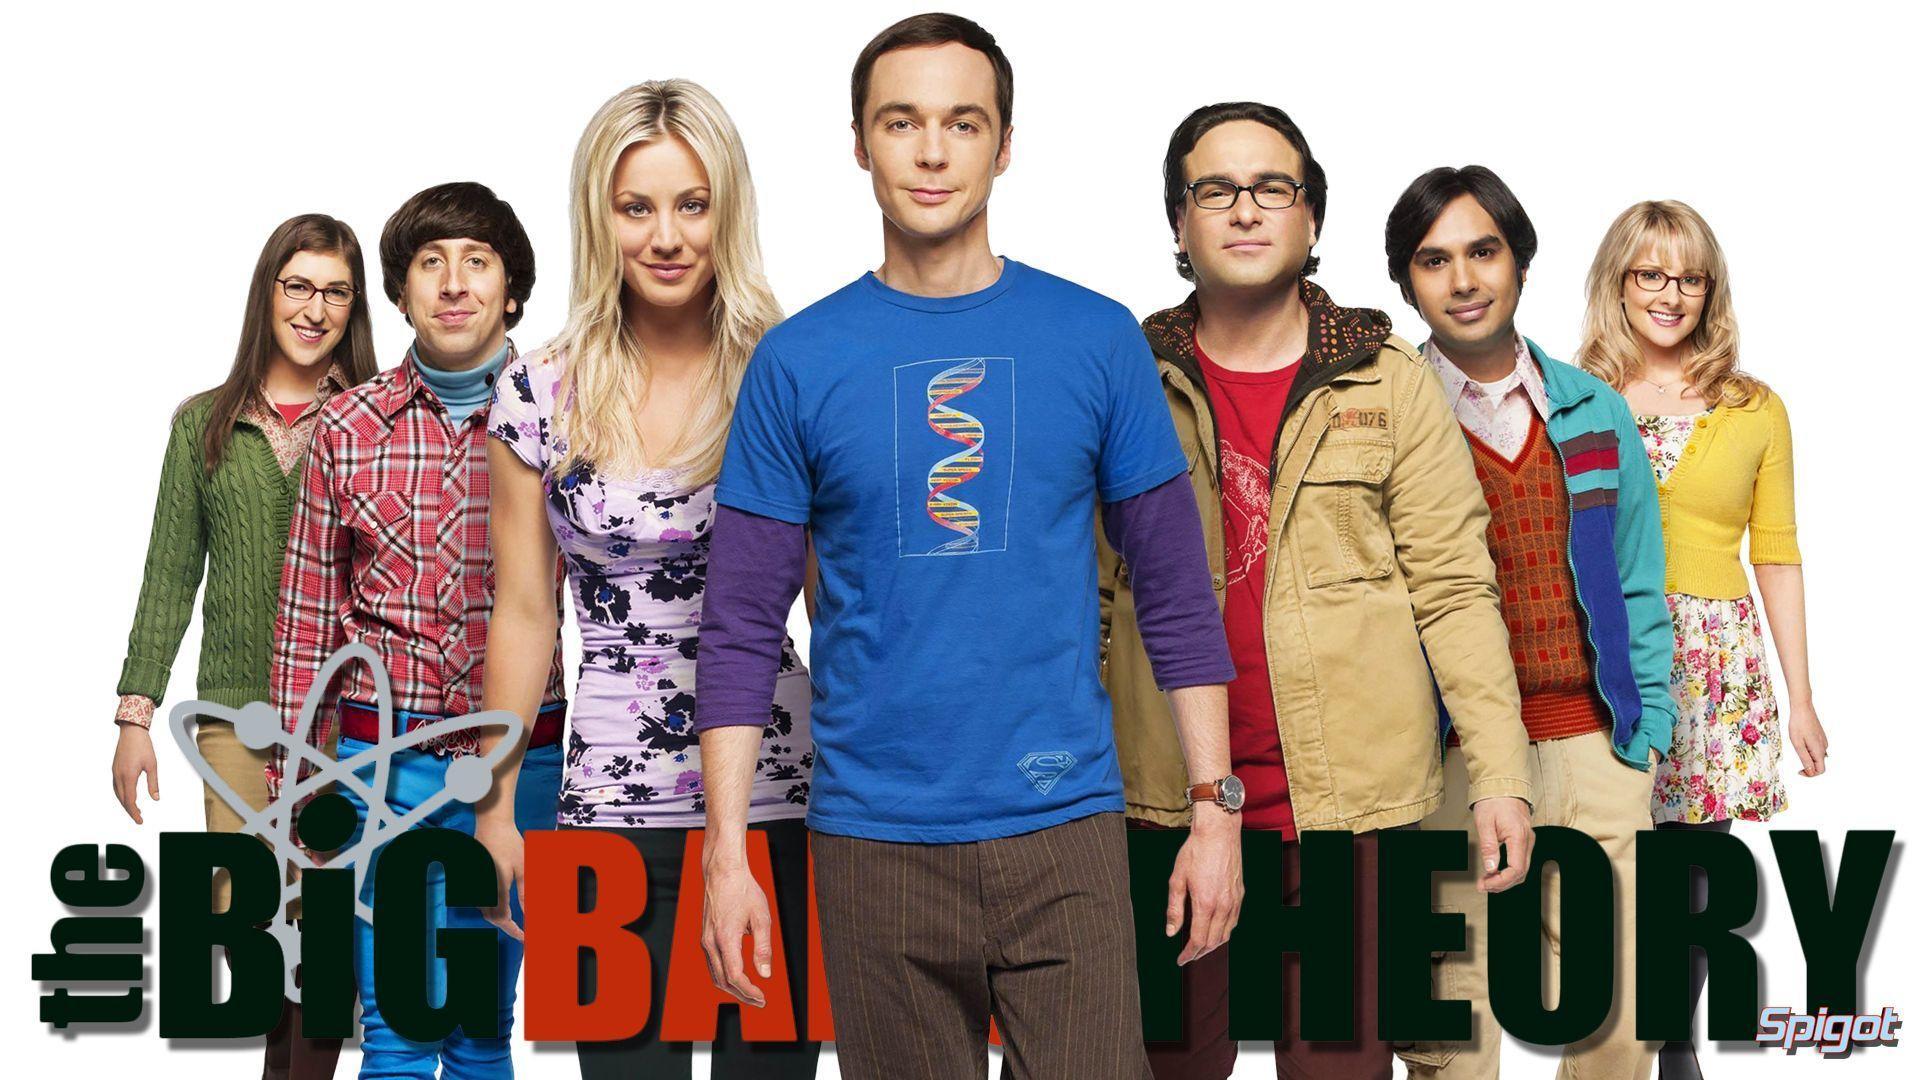 1920x1080px The Big Bang Theory 274.89 KB